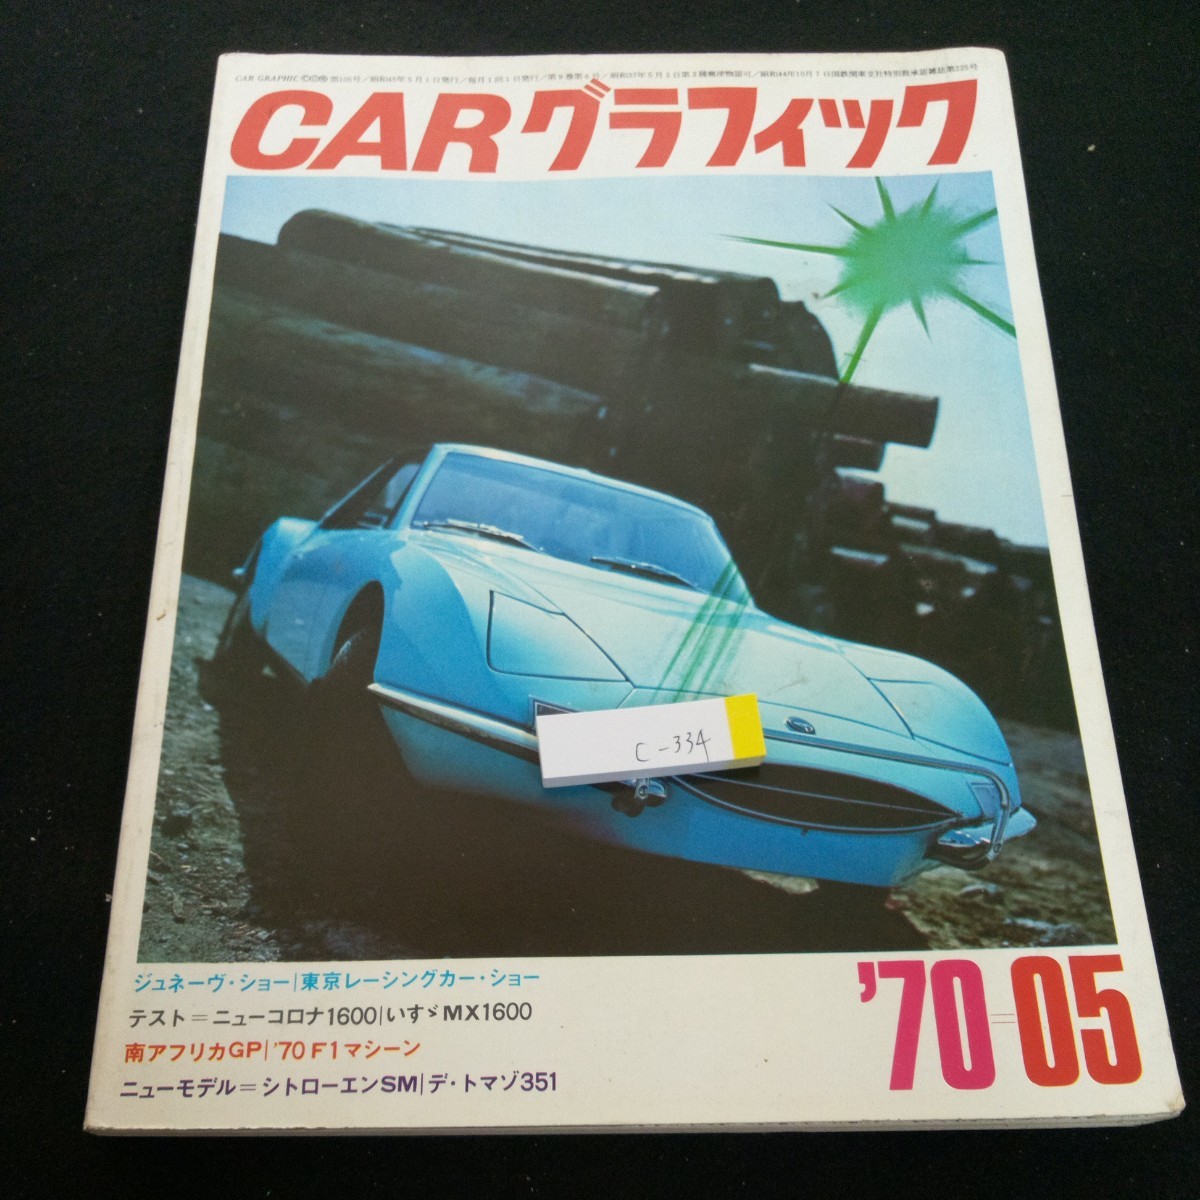 c-334 カー・グラフィック 昭和45年発行 ニ玄社 ジュネーヴ・ショー 東京レーシングカー・ショー テスト=ニューコロナ1600 など※3 _傷、汚れあり